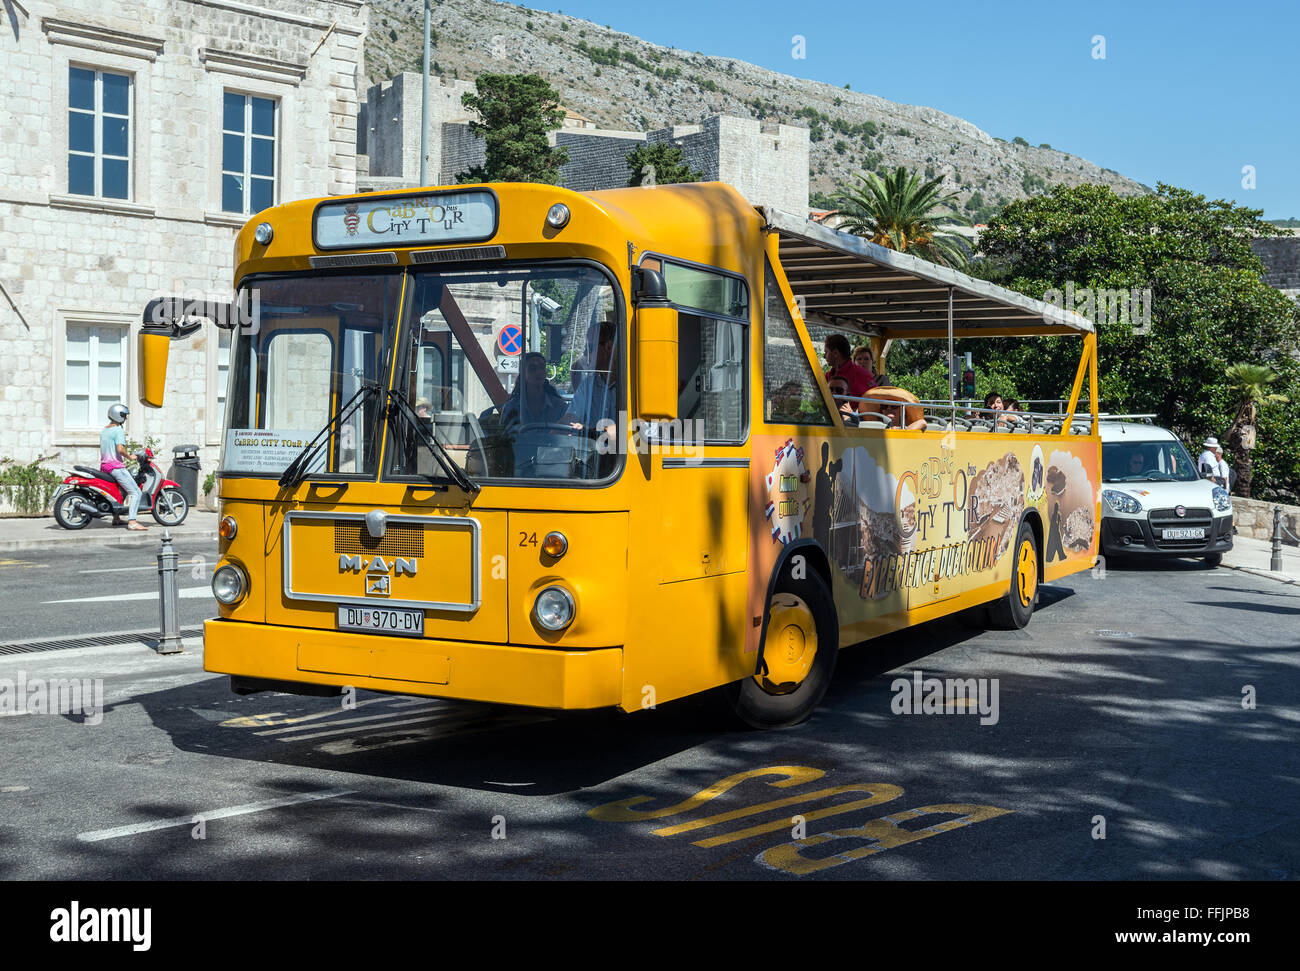 City tour bus in Dubrovnik, Croatia Stock Photo